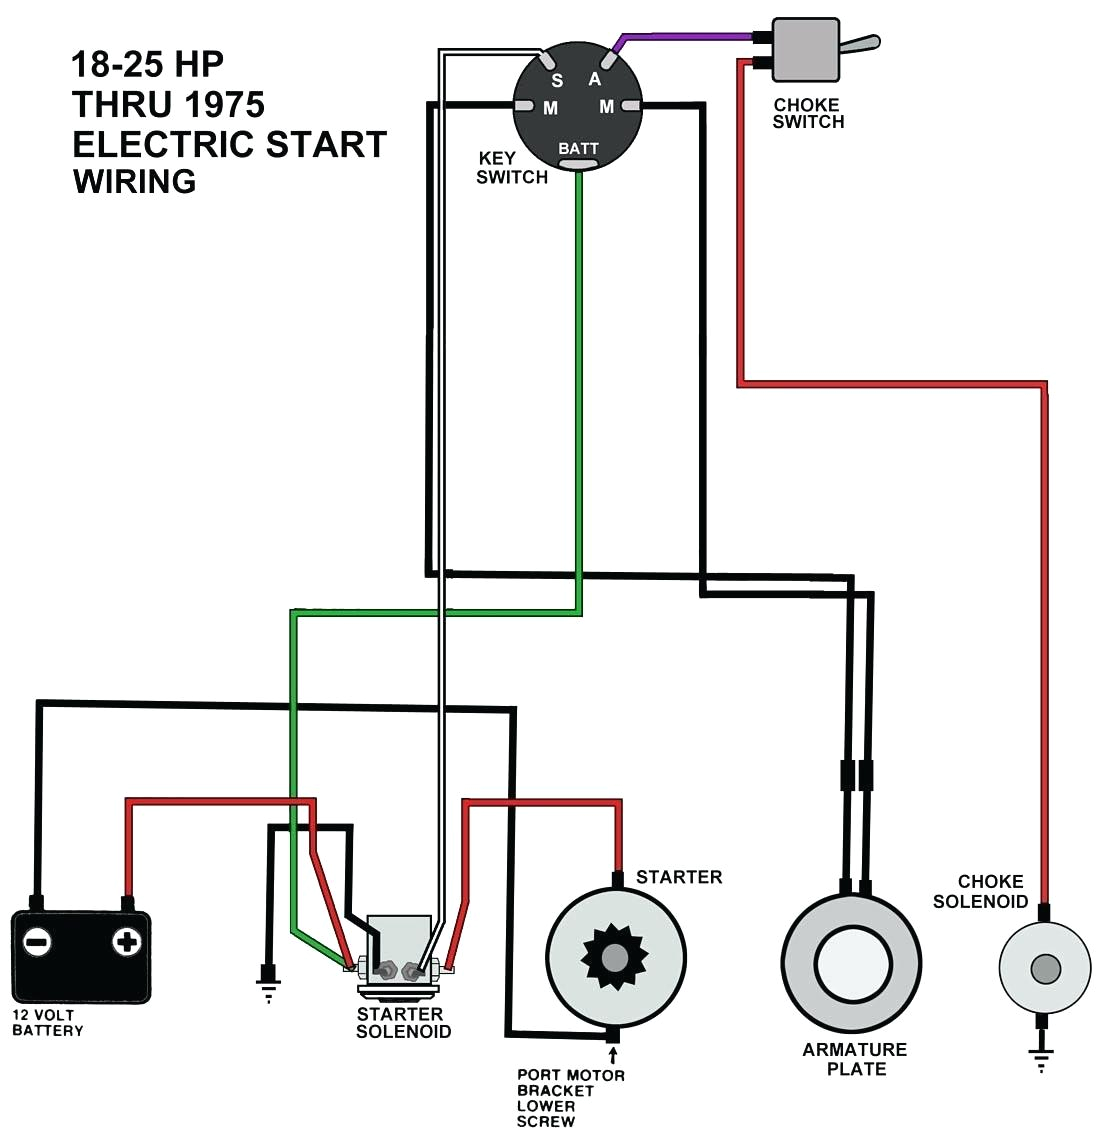 key switch wiring diagram my wiring diagram key switch wiring diagram